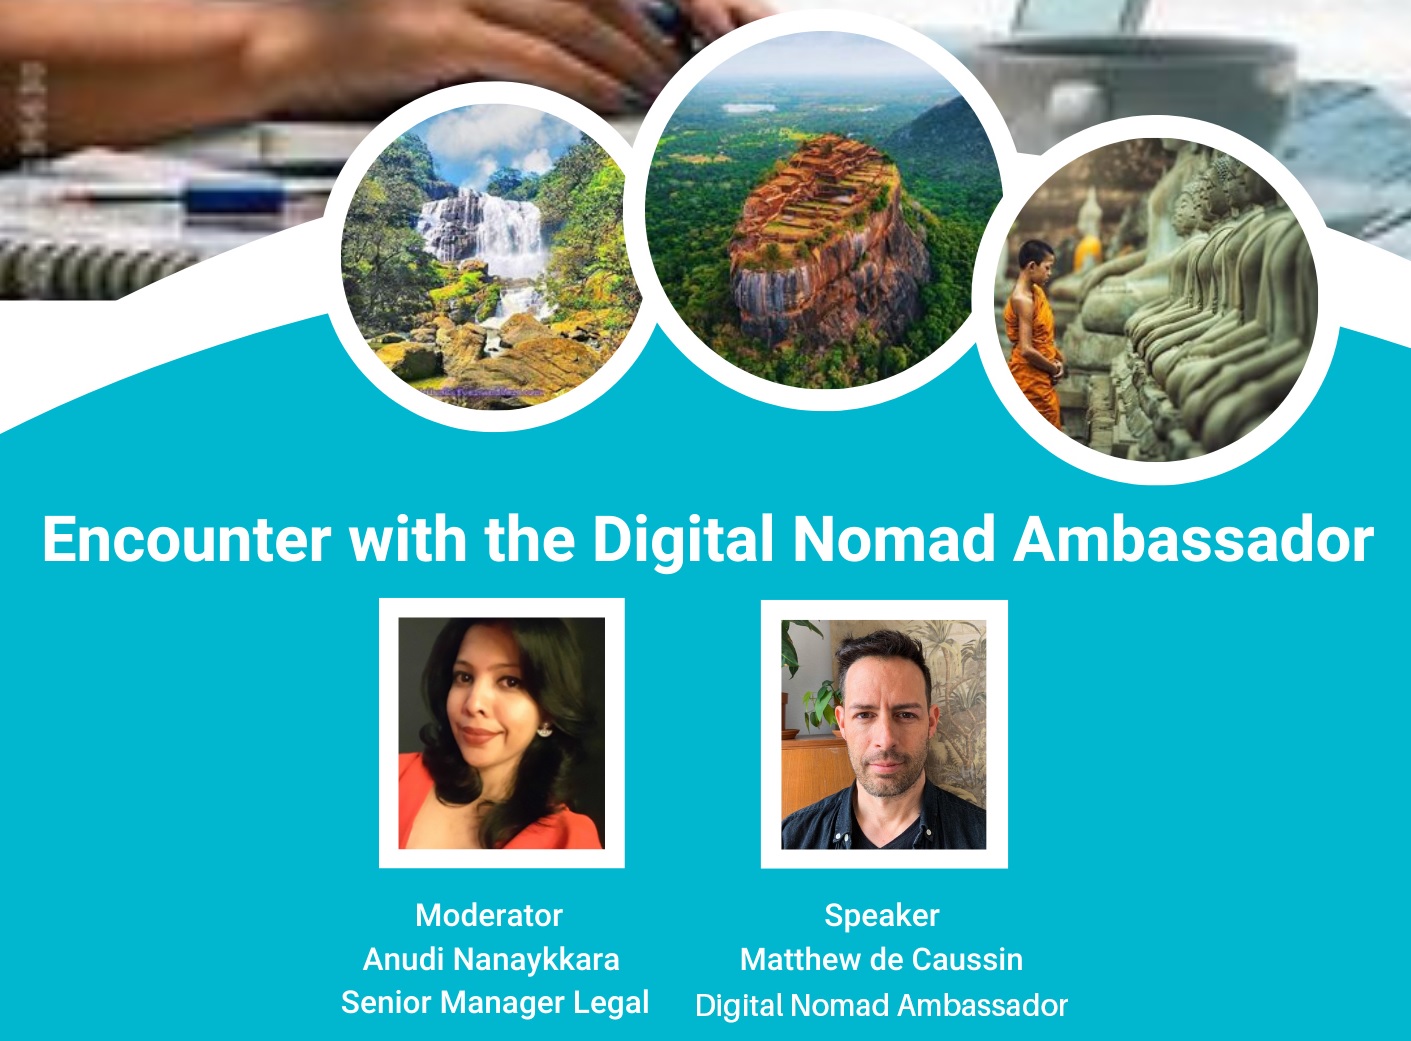 An Encounter with a Digital Nomad Ambassador